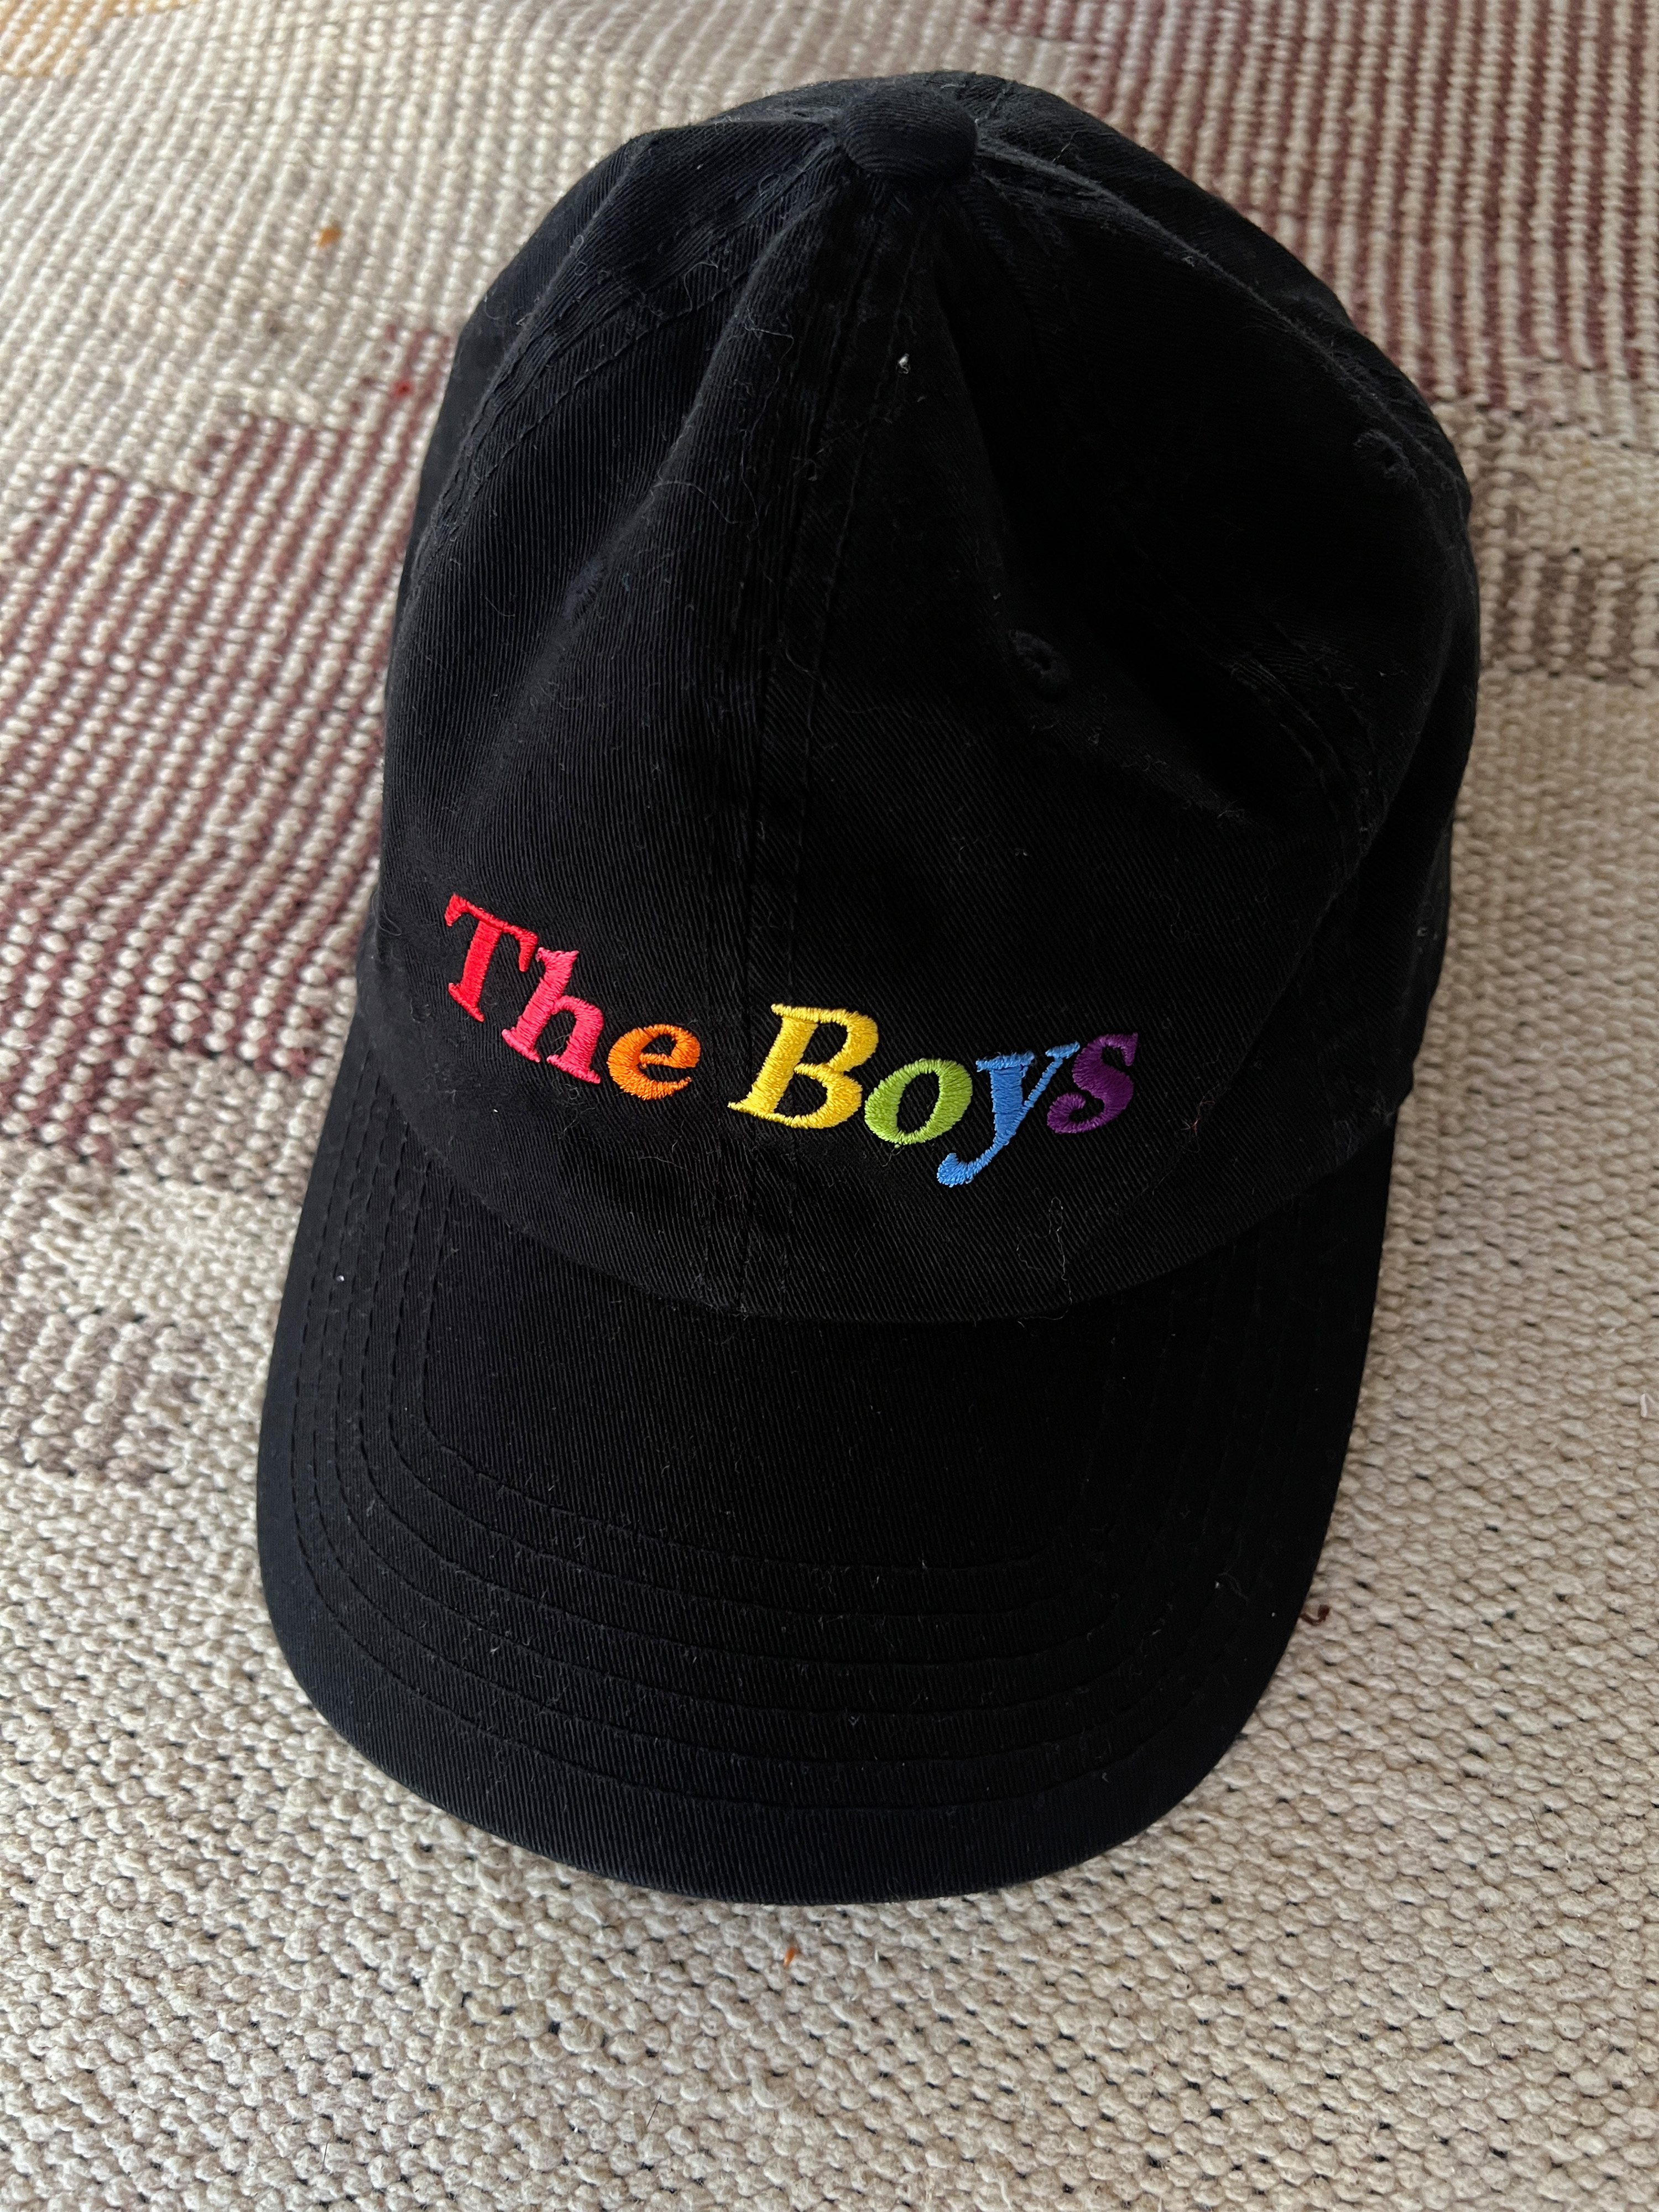 The boys vintage ball cap